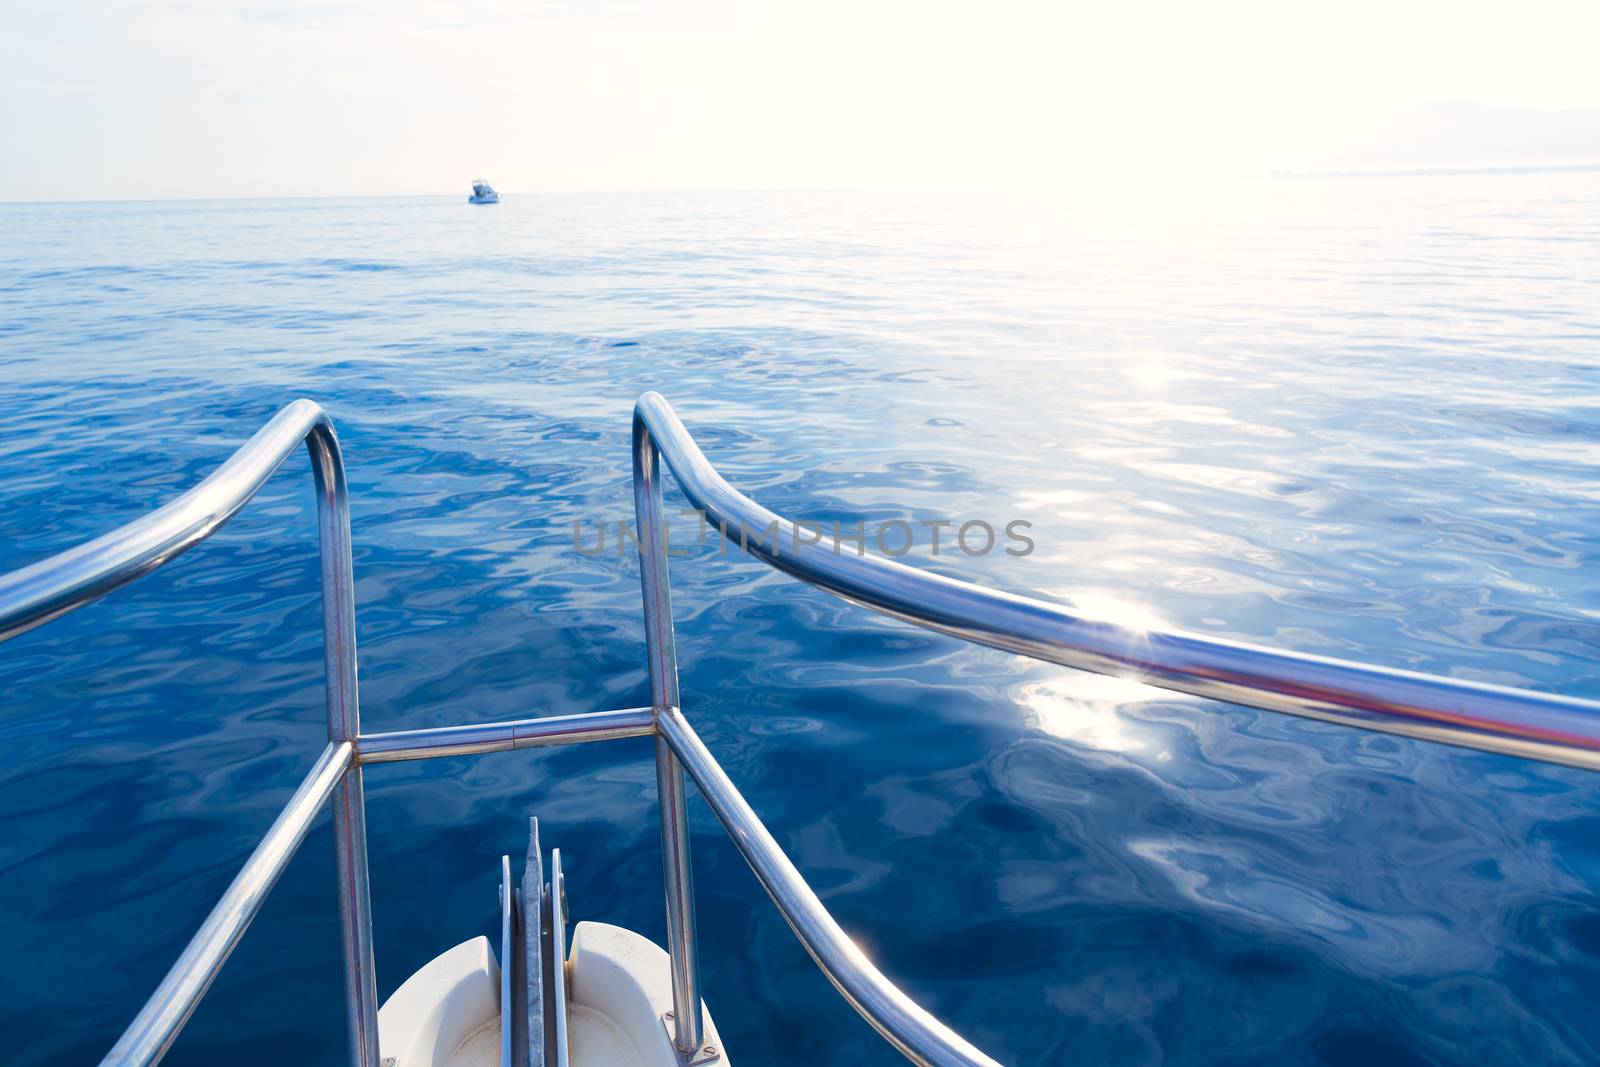 Boat bow sailing in blue calm sea at blue Mediterranean by lunamarina